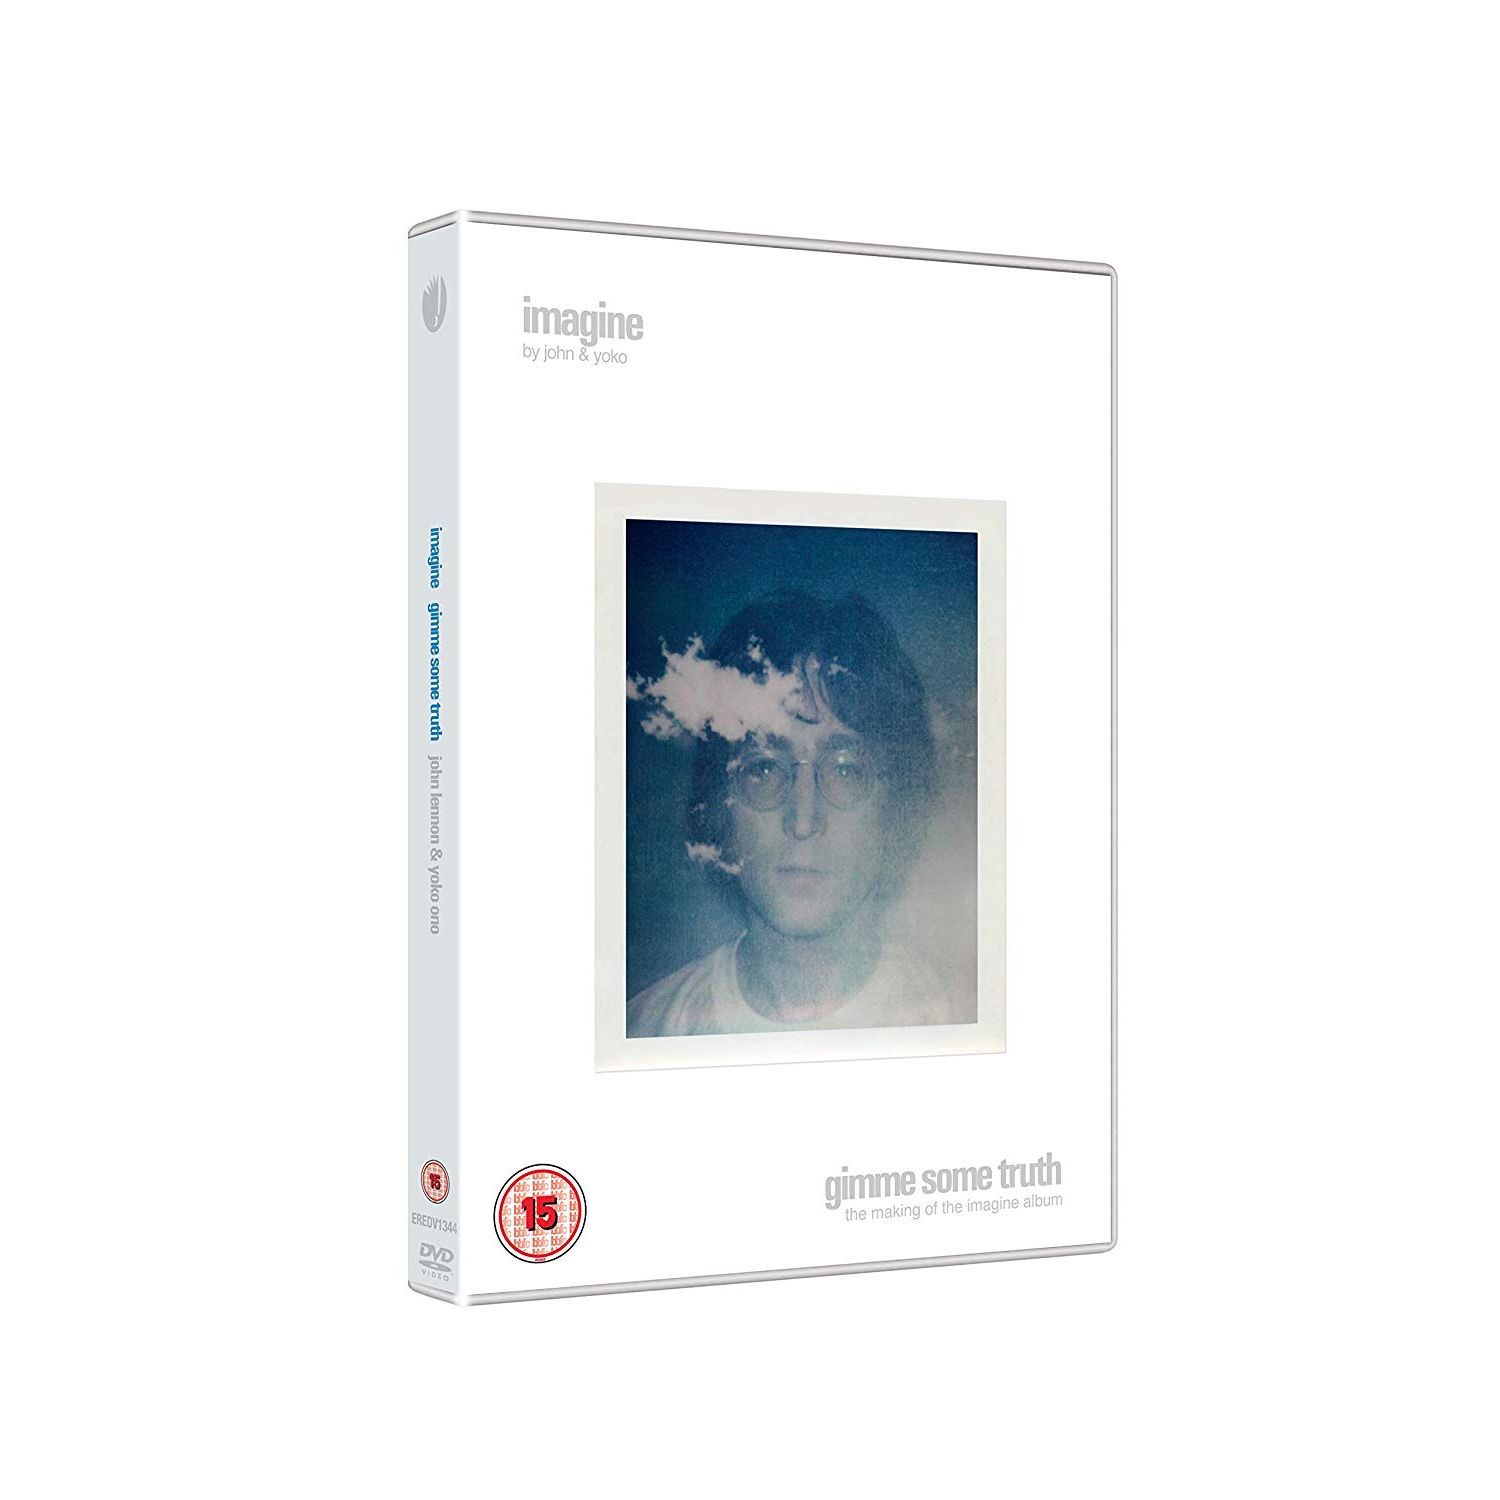 JOHN LENNON & YOKO ONO / ジョン・レノン&ヨーコ・オノ / IMAGINE & GIMME SOME TRUTH (DVD)